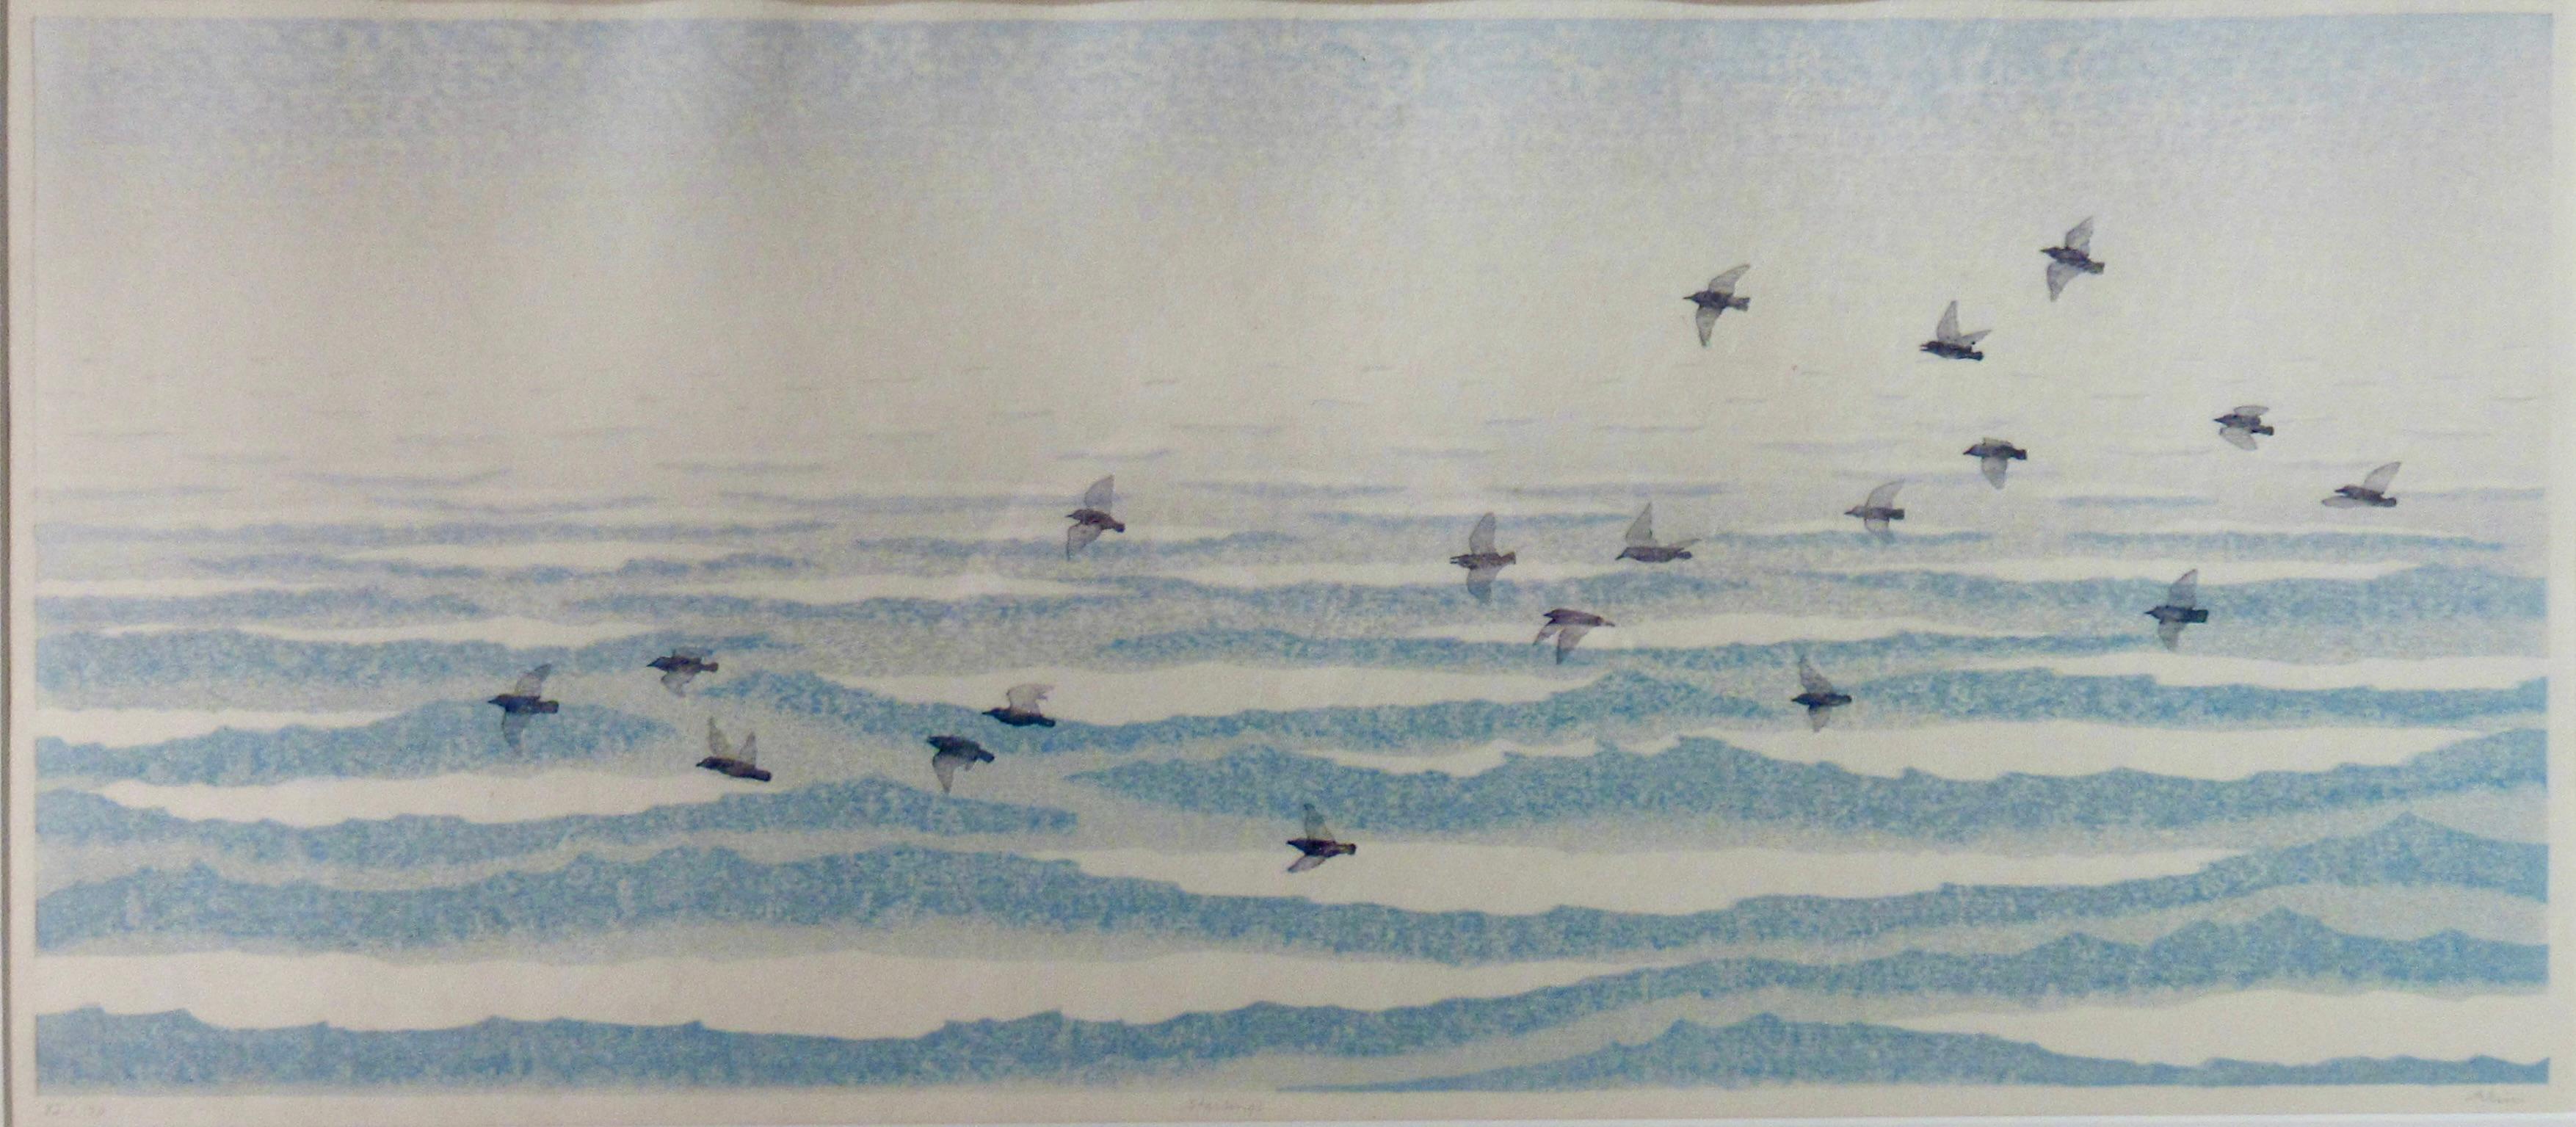 Starling - Print by Suezan Aikins